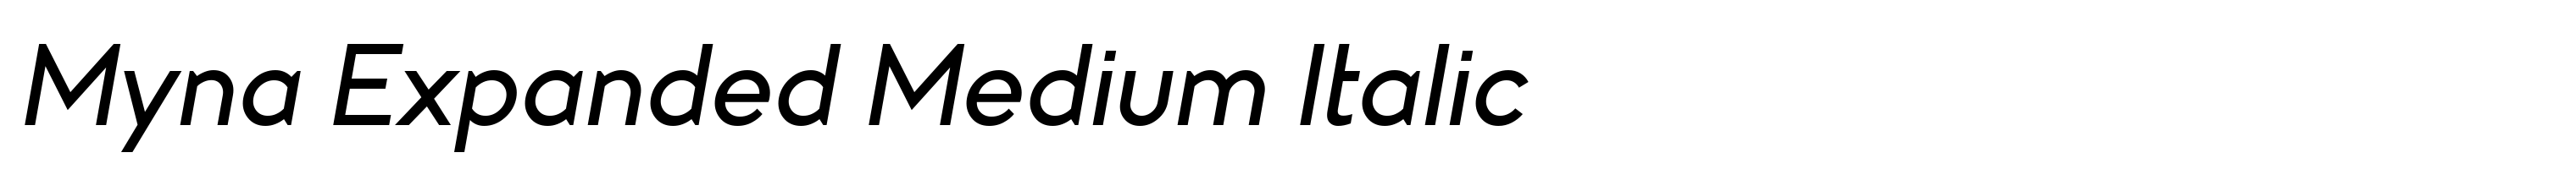 Myna Expanded Medium Italic